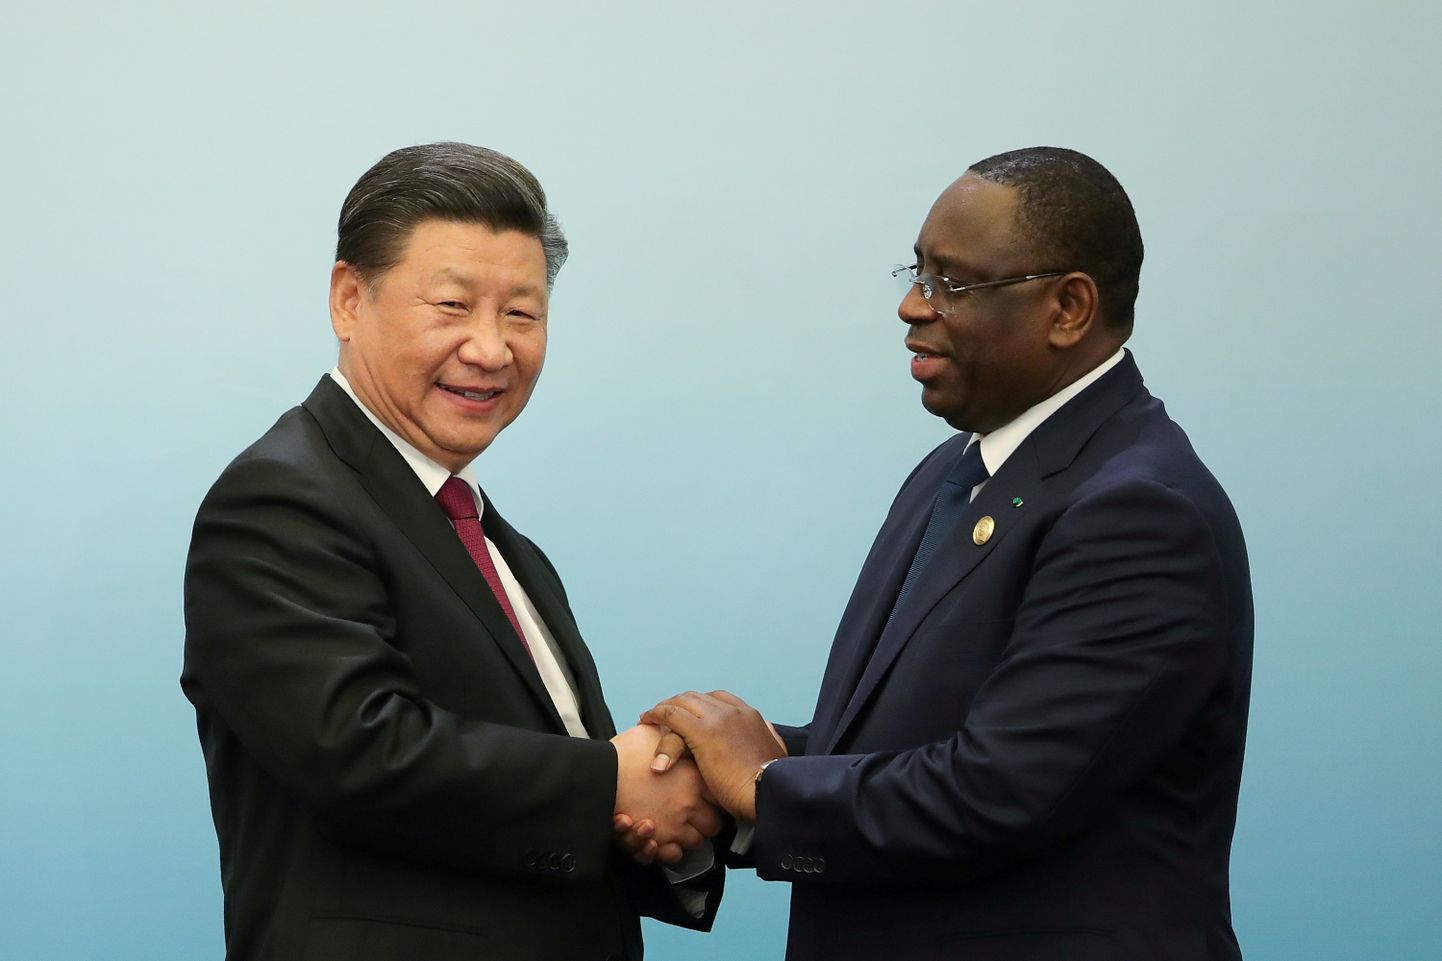 Hiina president Xi Jinping (vasakul) surumas kätt Senegali riigipea Macky Salliga.